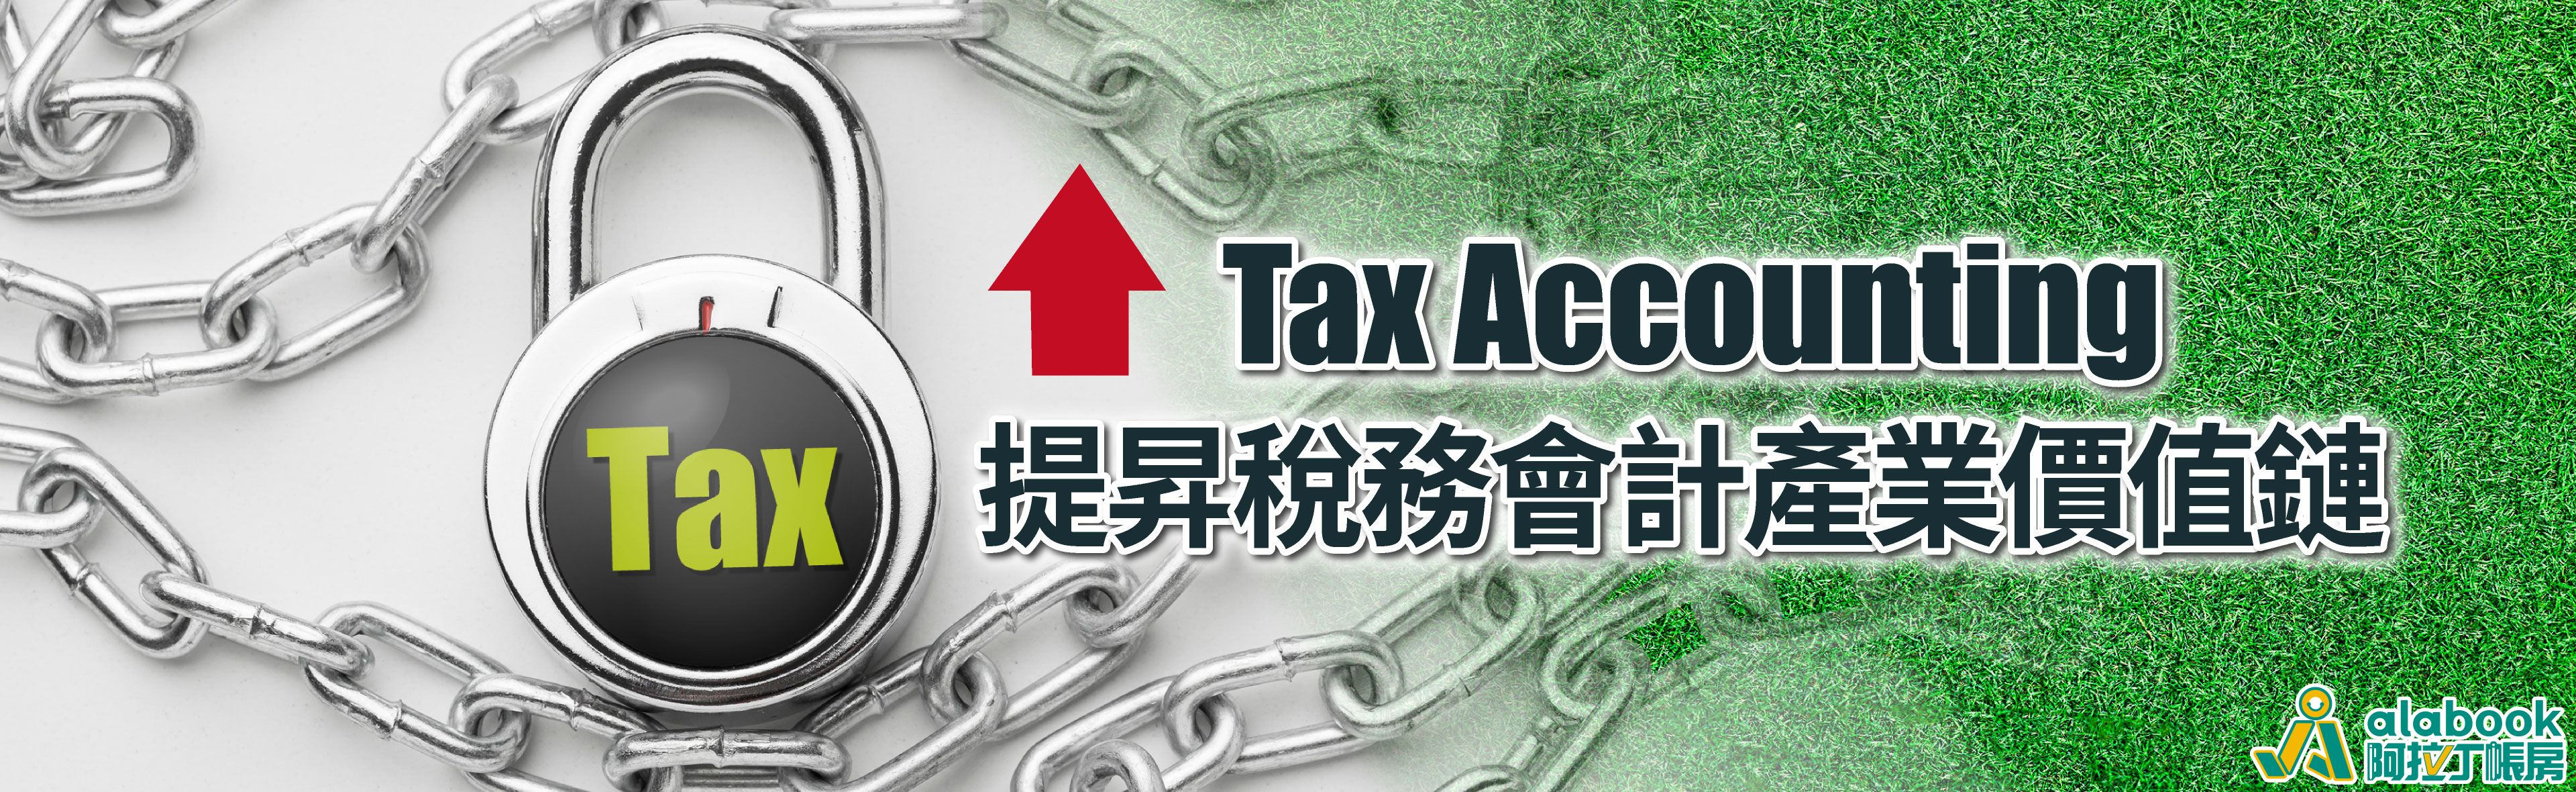 Tax-Accounting--提昇稅務會計產業價值鏈